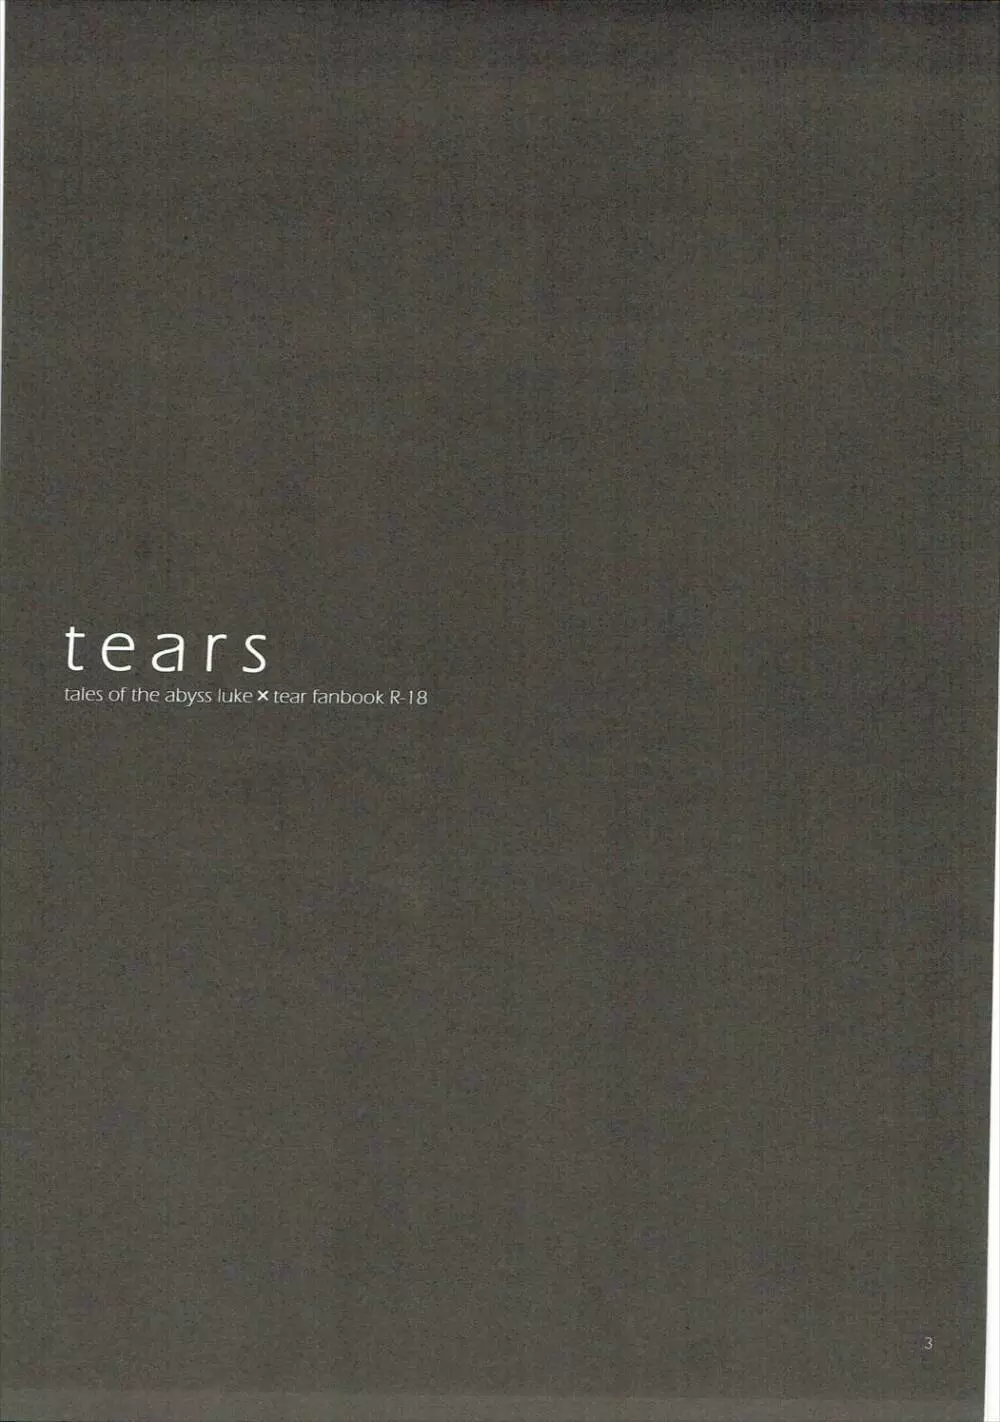 tears - page2